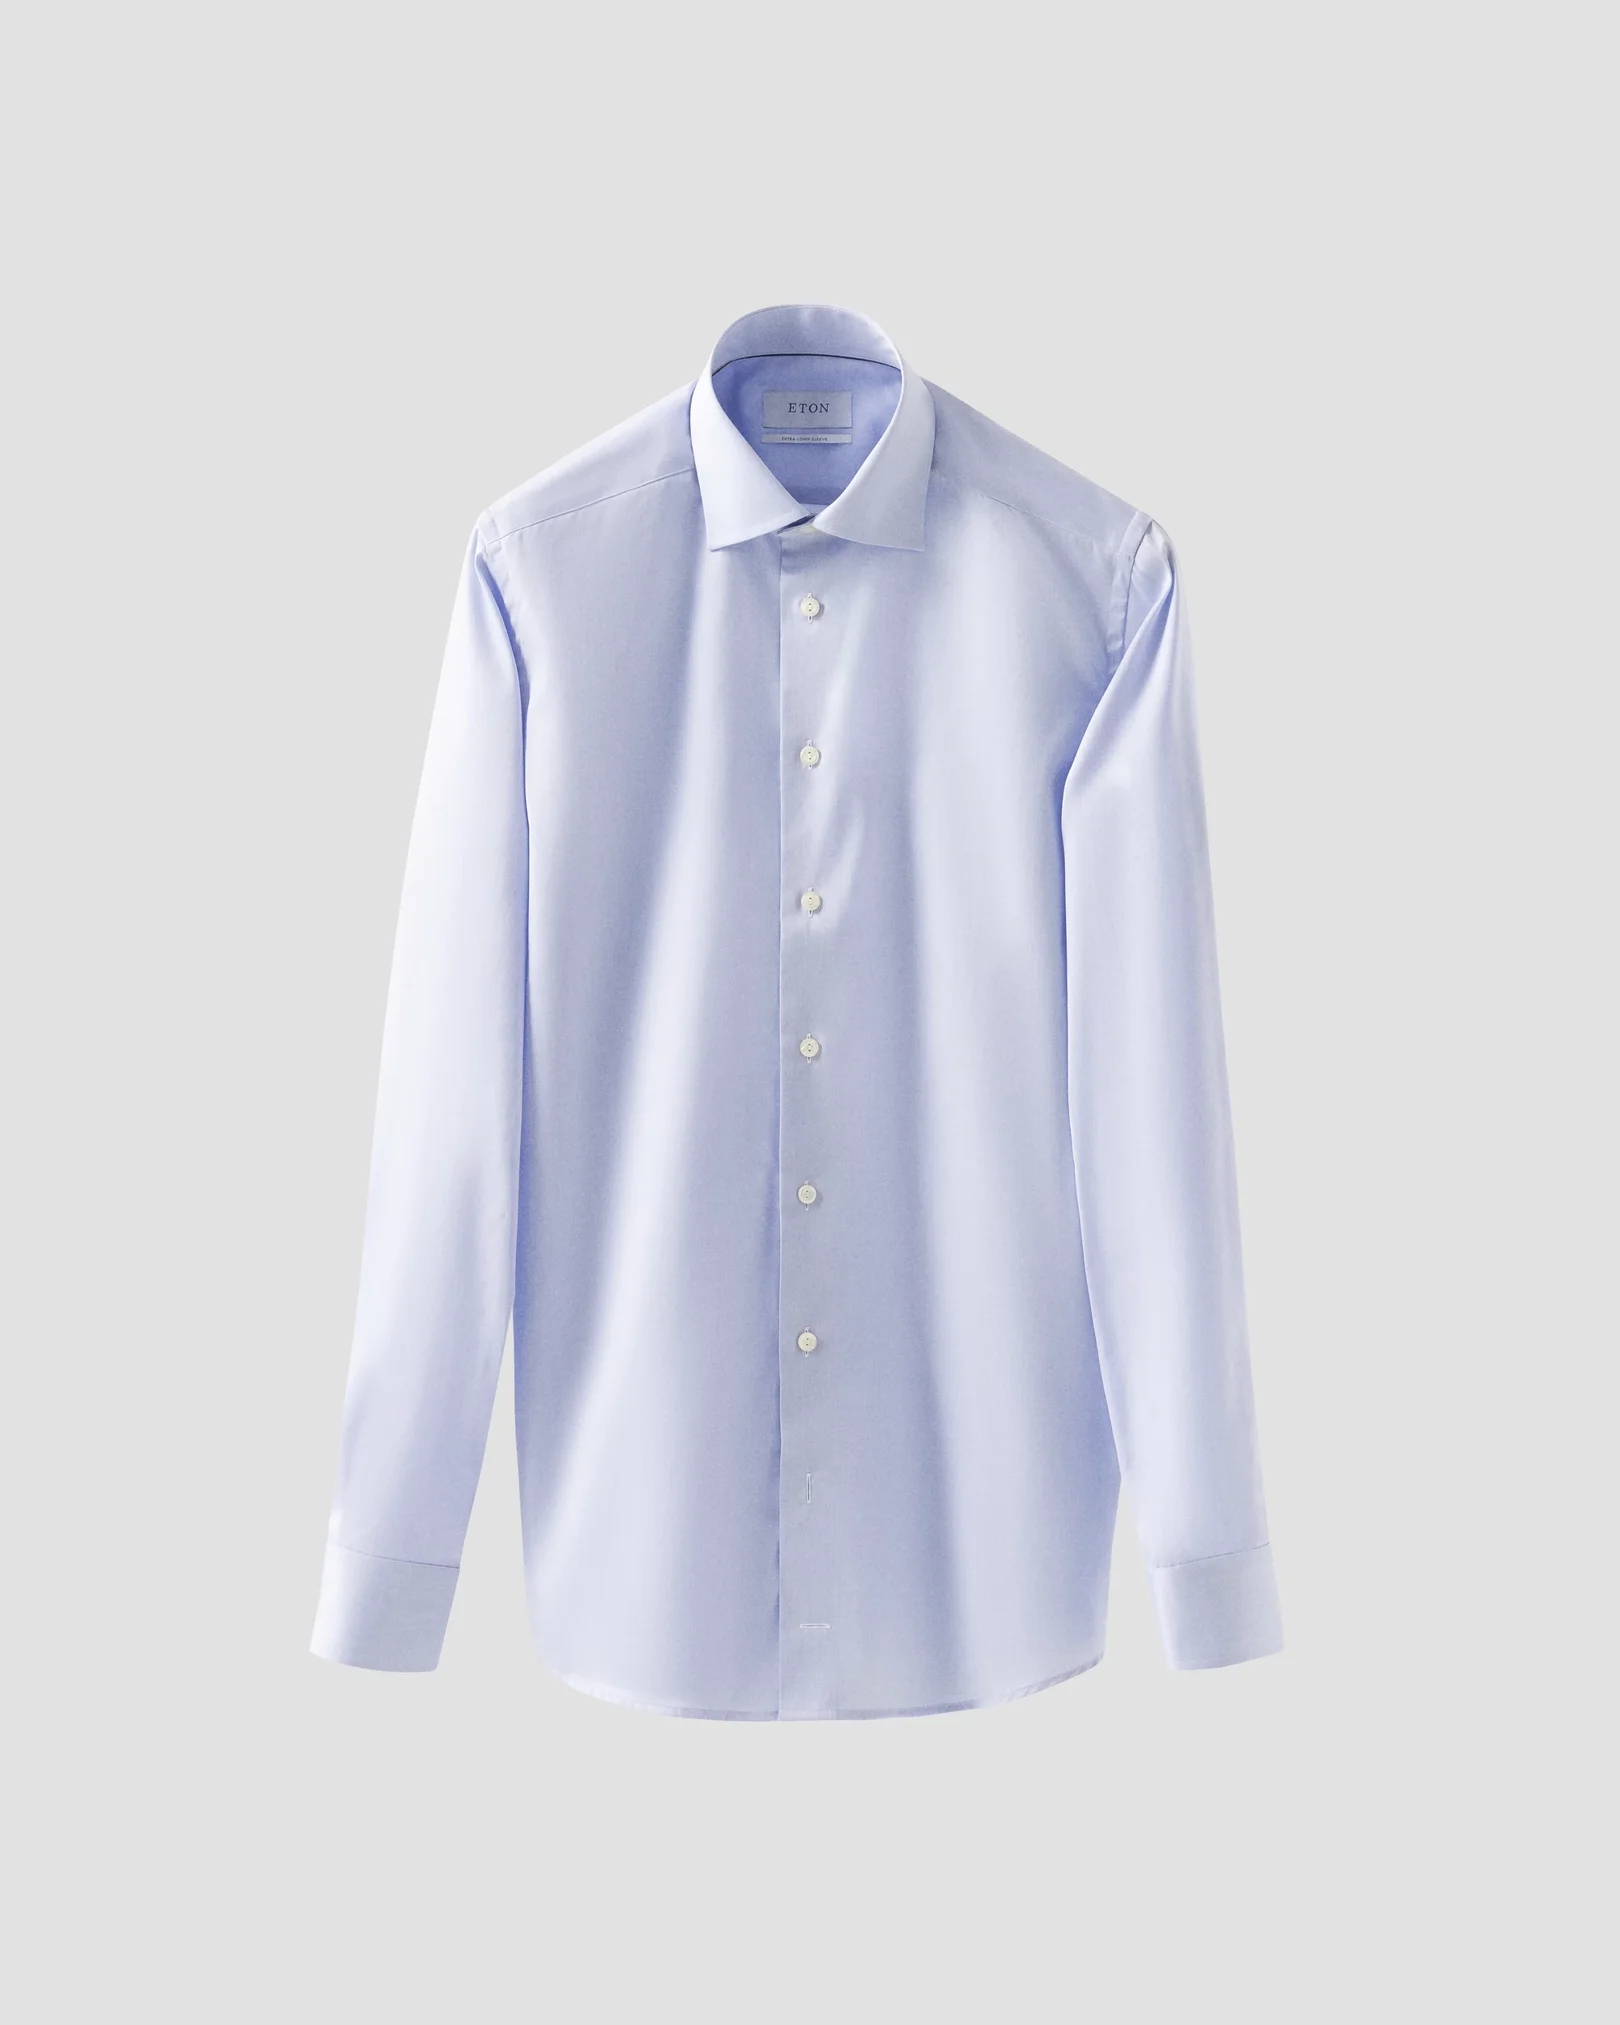 Eton - light blue signature twill shirt xls